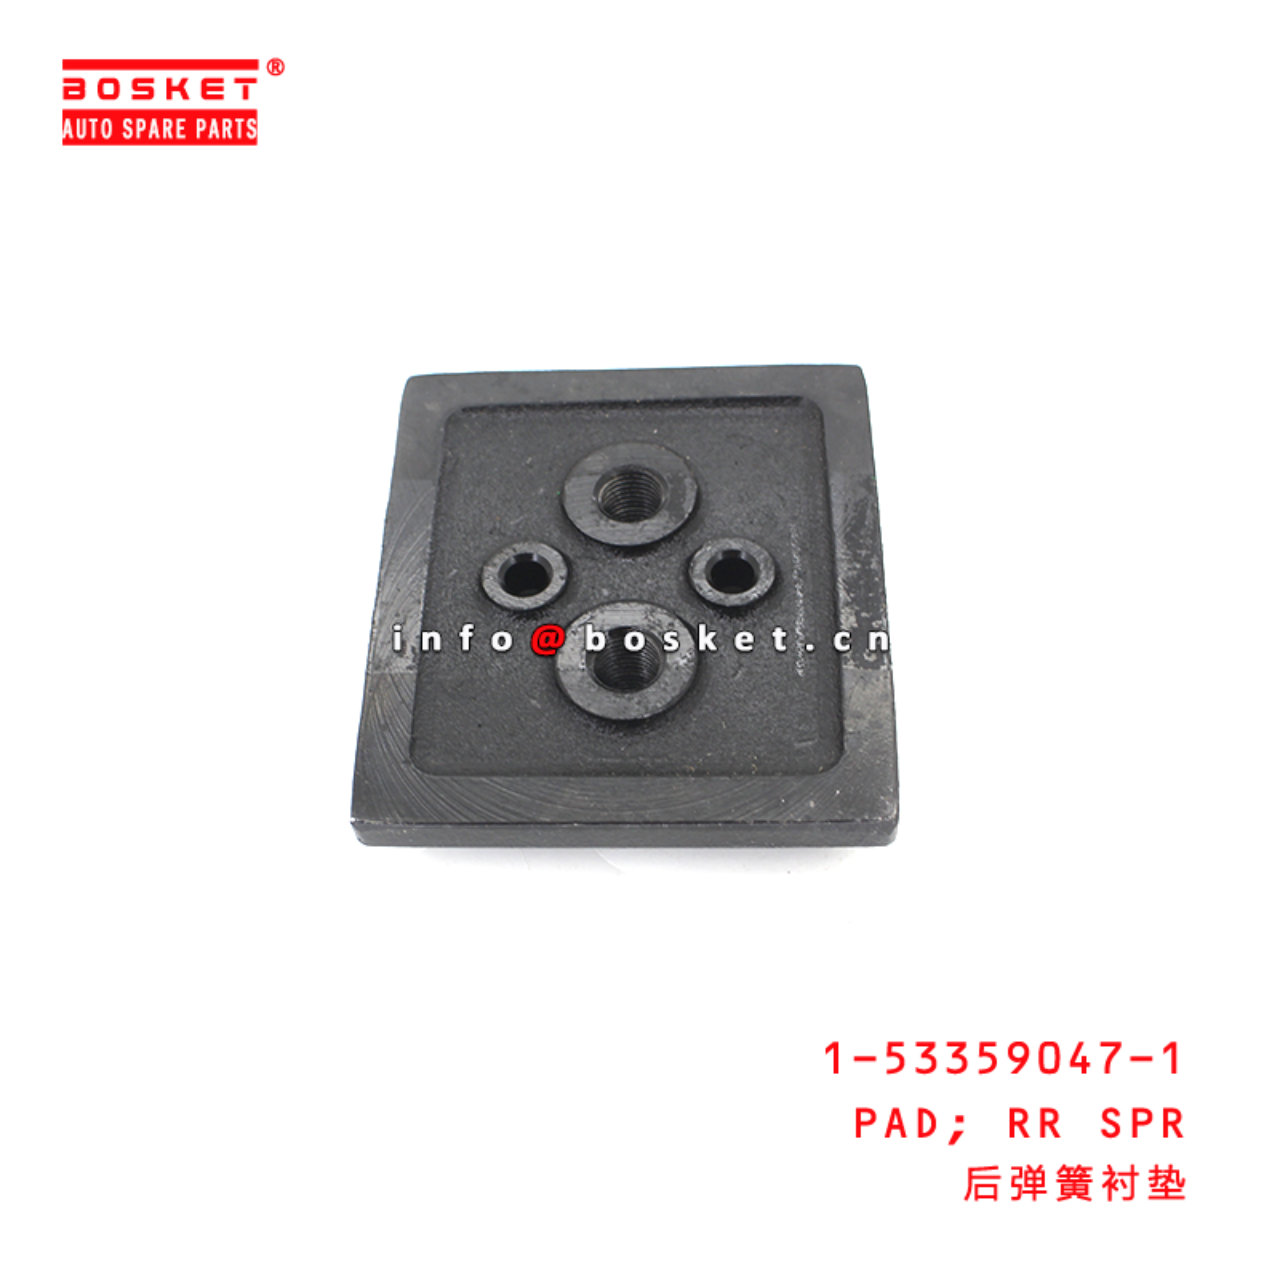 1-53359047-1 Rear Spring Pad suitable for ISUZU FTR 1533590471